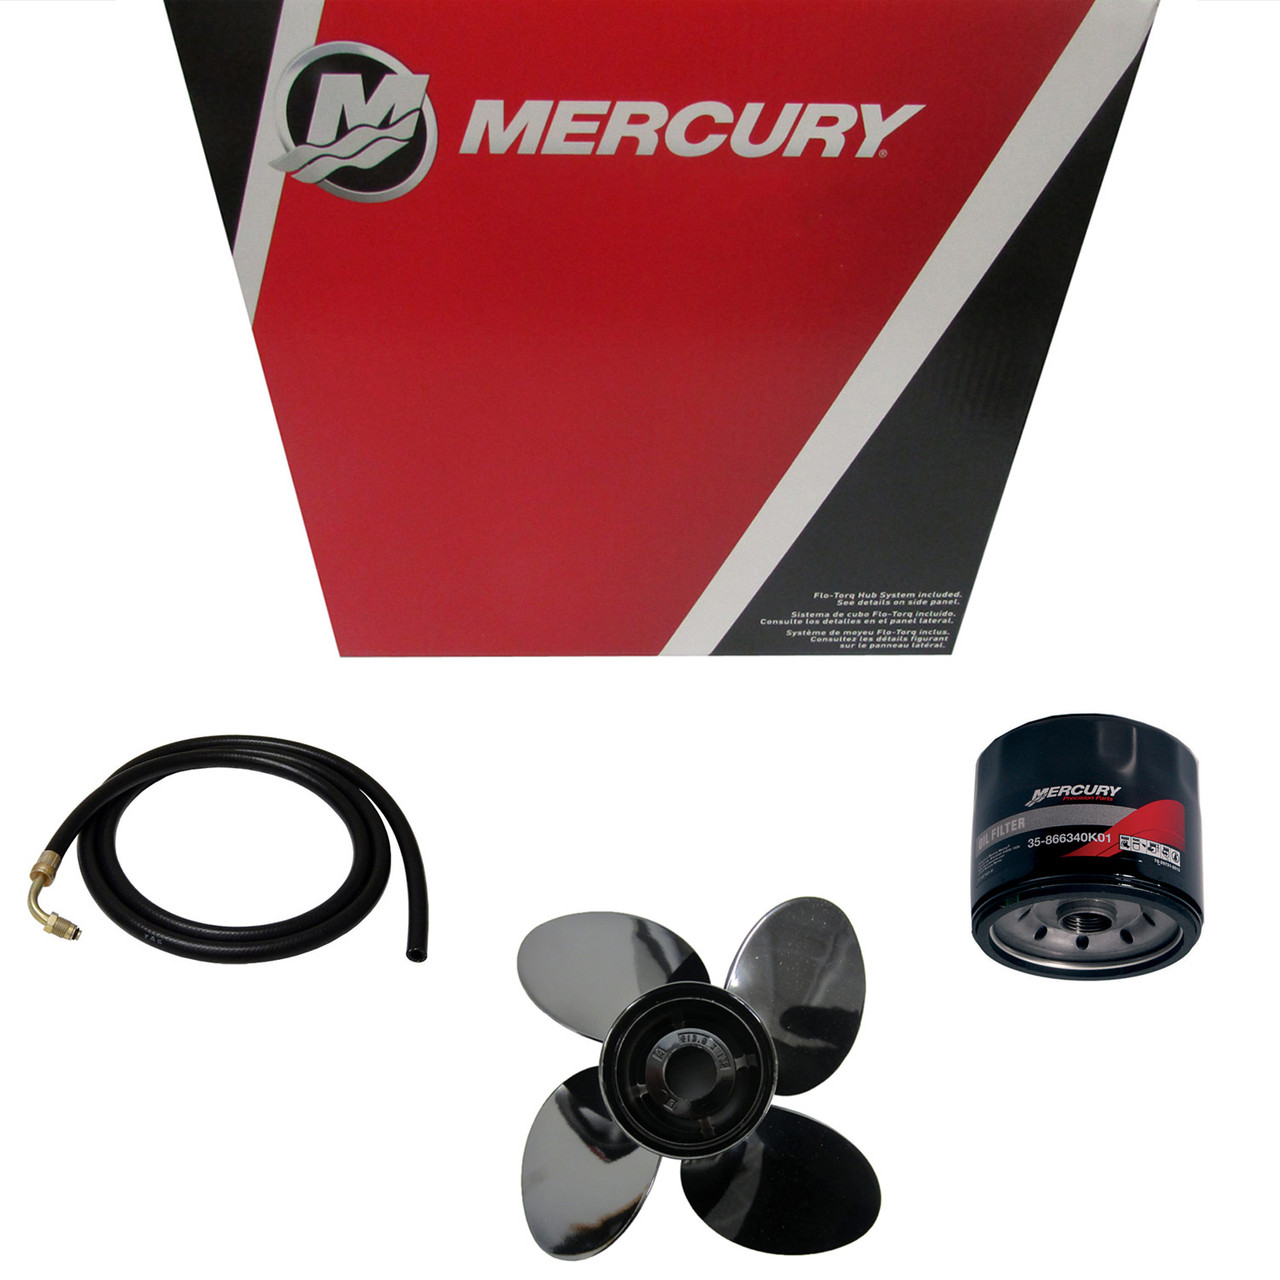 Mercury Marine / Mercruiser New OEM Decal Set (Mercury 40), 37-897510A02